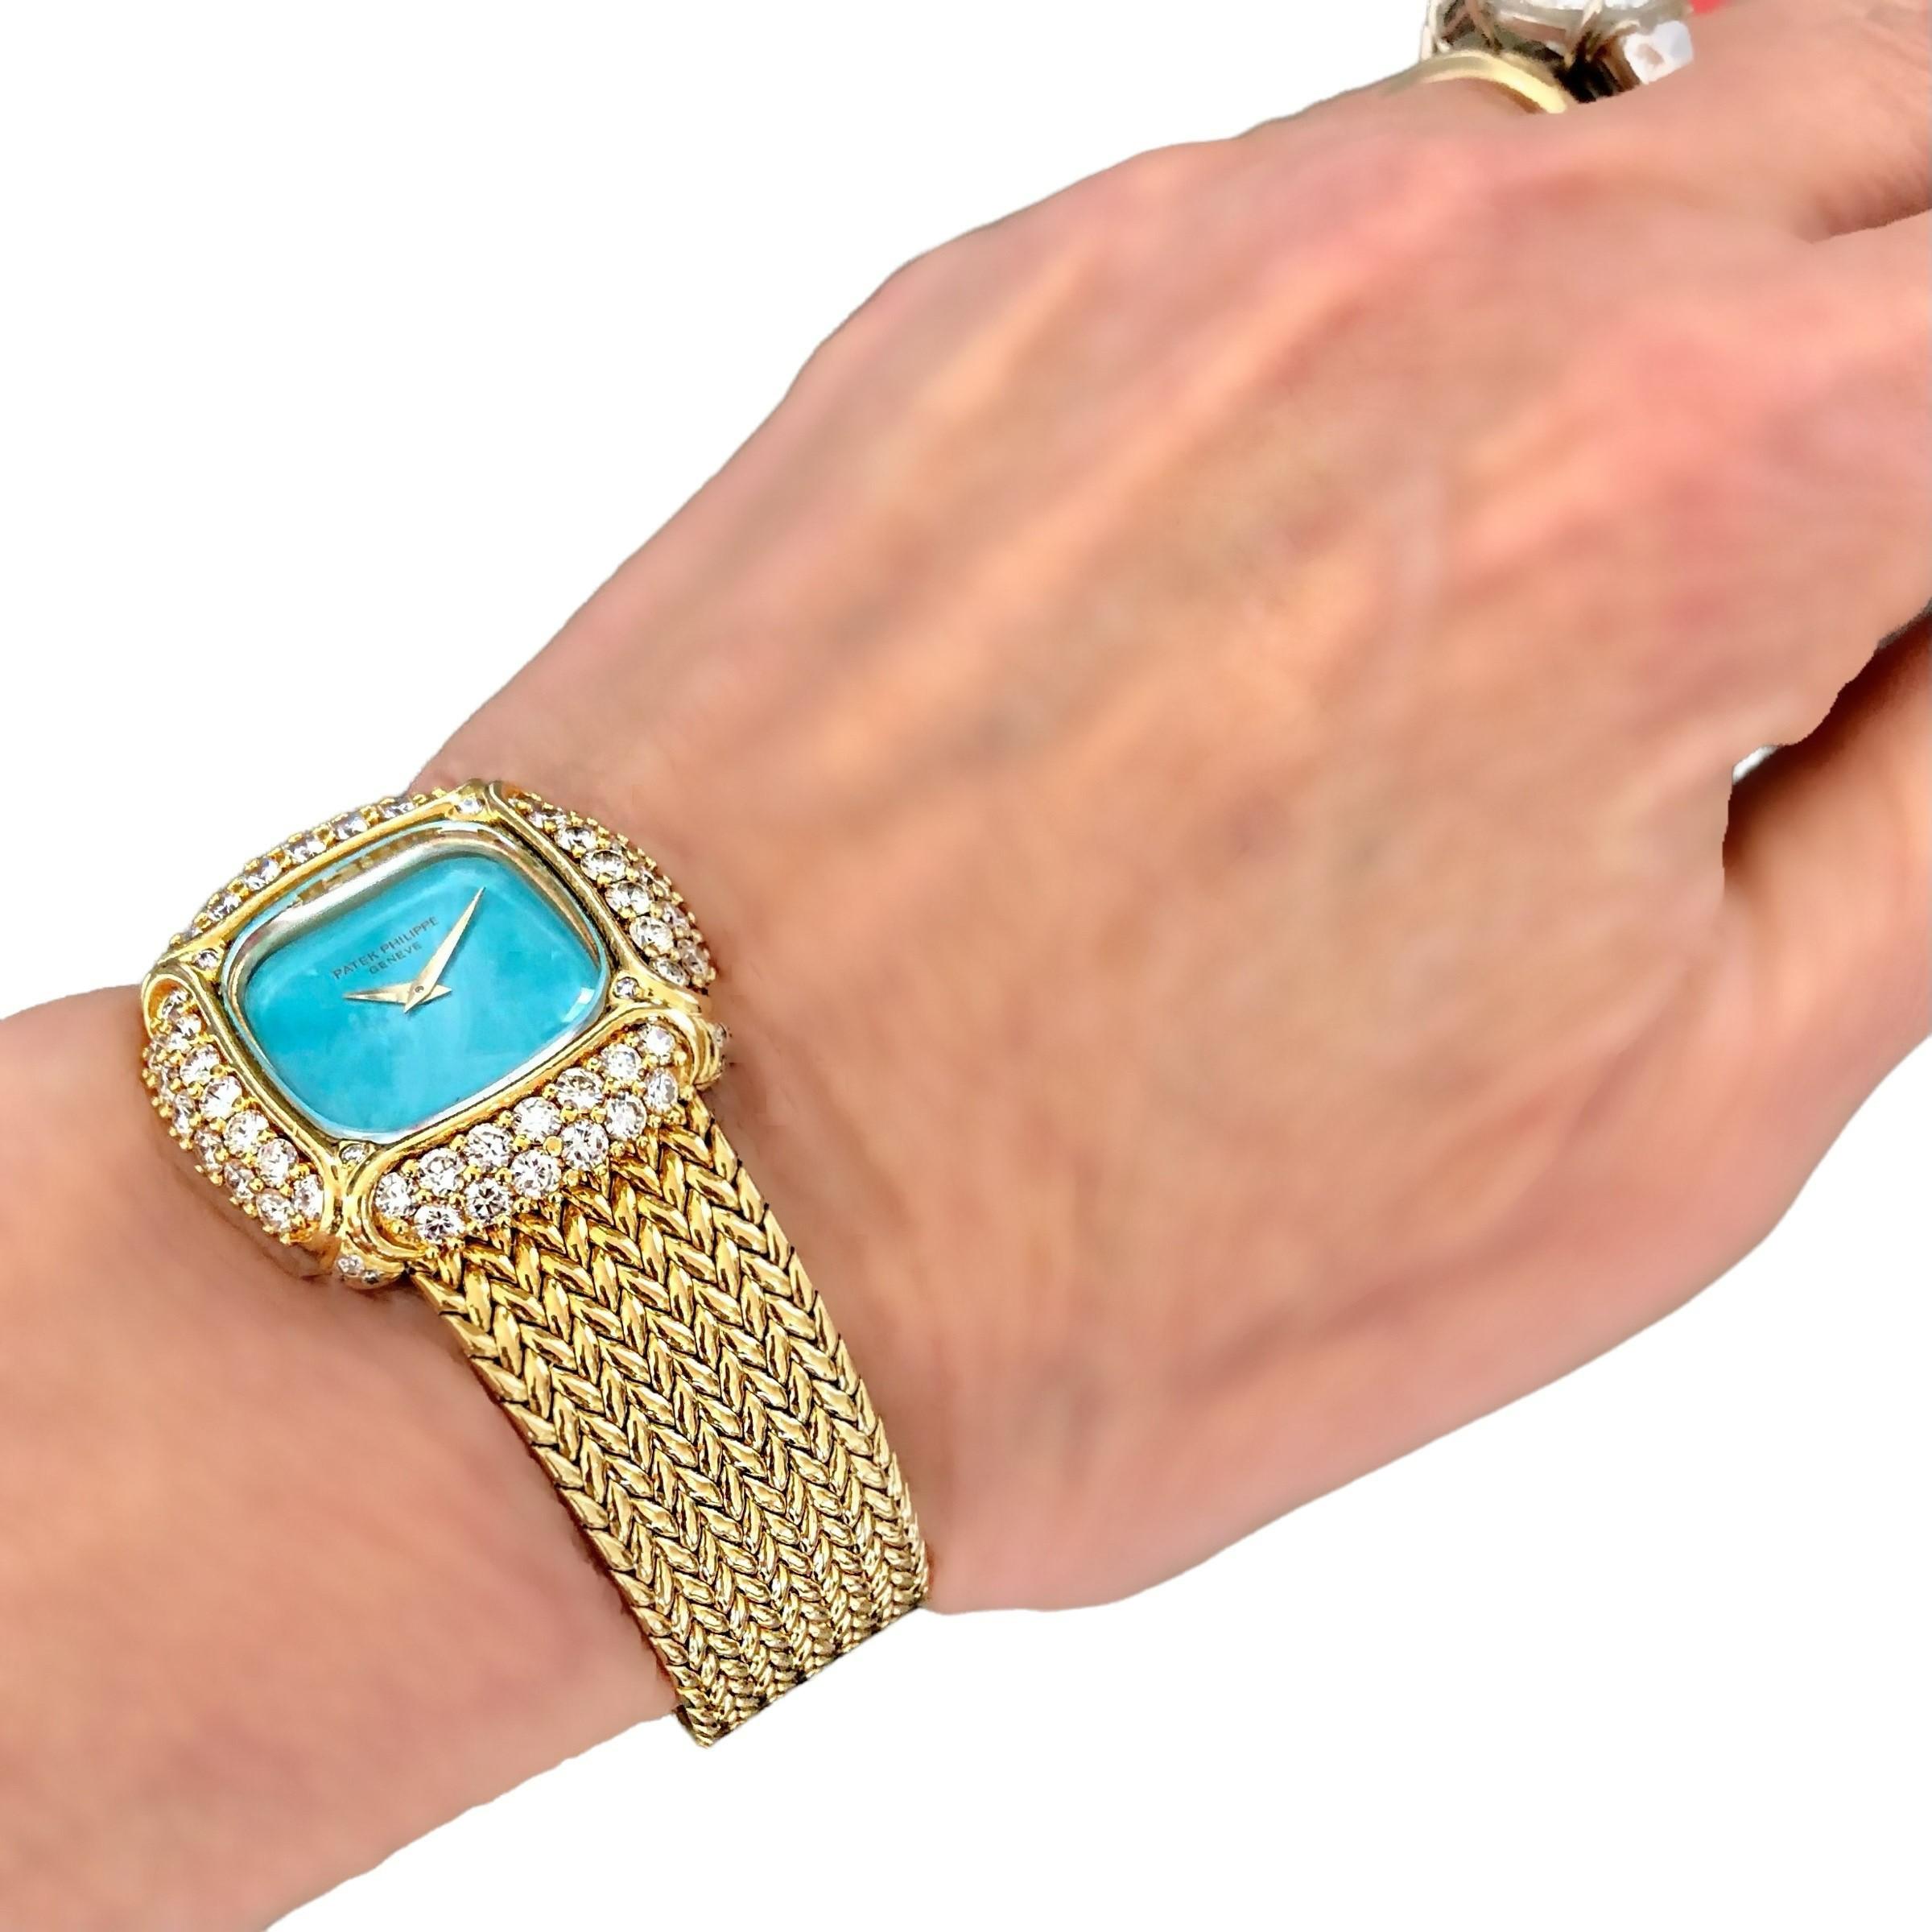 Brilliant Cut Vintage Patek Philippe Ladies 18k Yellow Gold, Diamond and Turquoise Wrist Watch